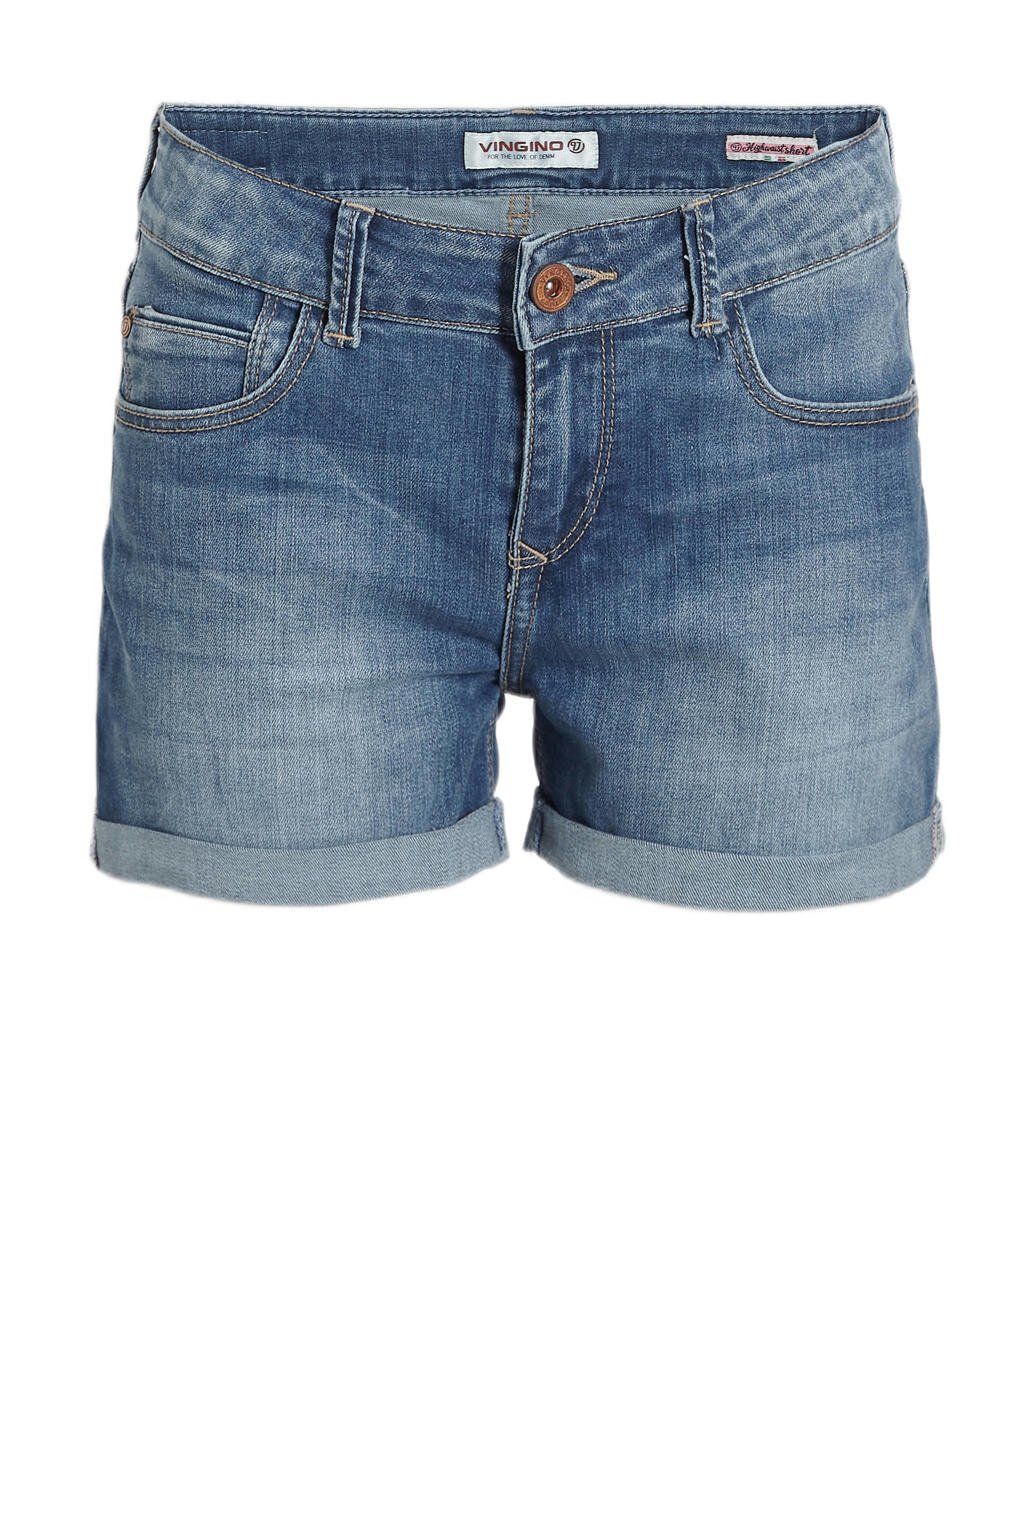 Stonewashed meisjes Vingino jeans short Daizy van stretchdenim met regular waist en rits- en knoopsluiting